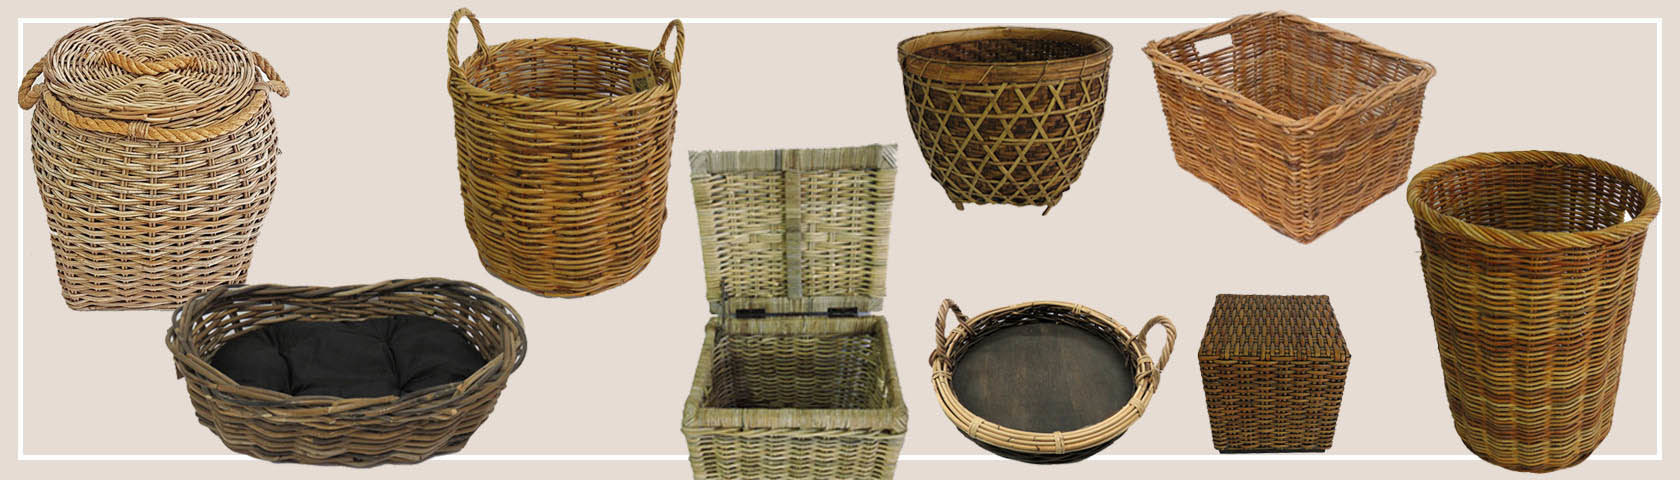 Cane Wicker Baskets | Rattan Laundry